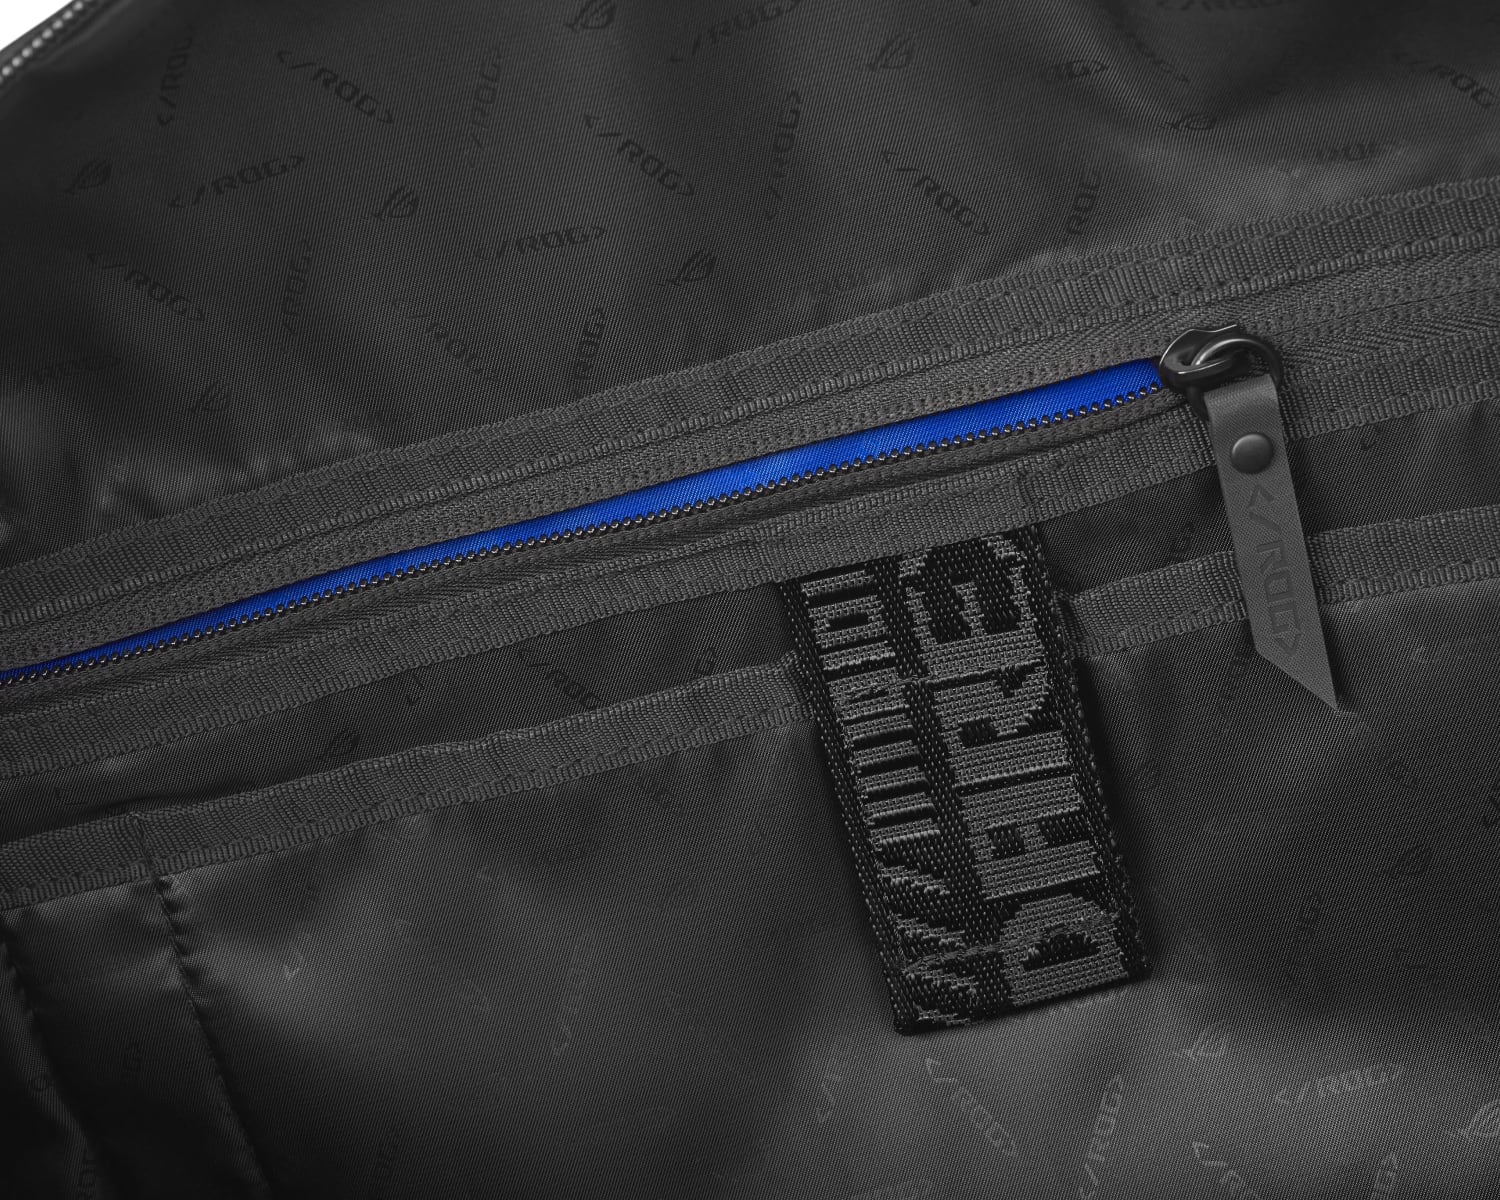 Extreme close-up of the interior zipper of the ROG SLASH Duffle Bag